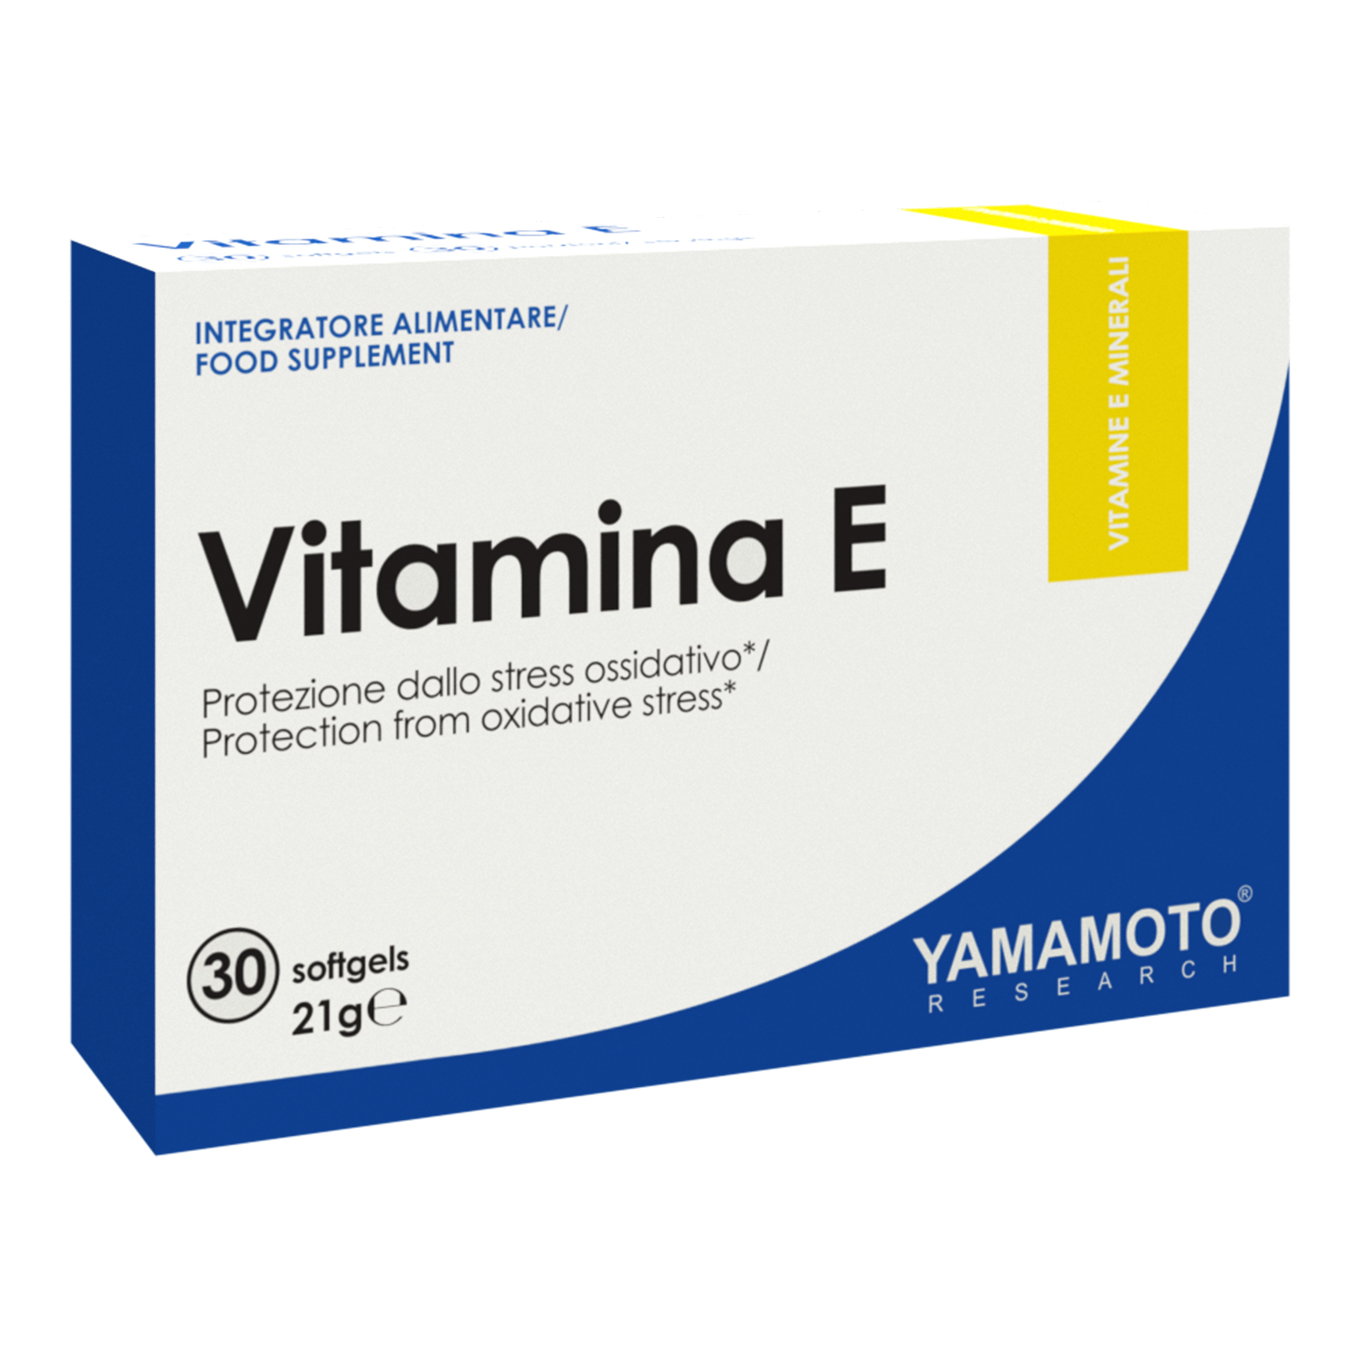 Yamamoto Research Vitamina E - 30 Softgels